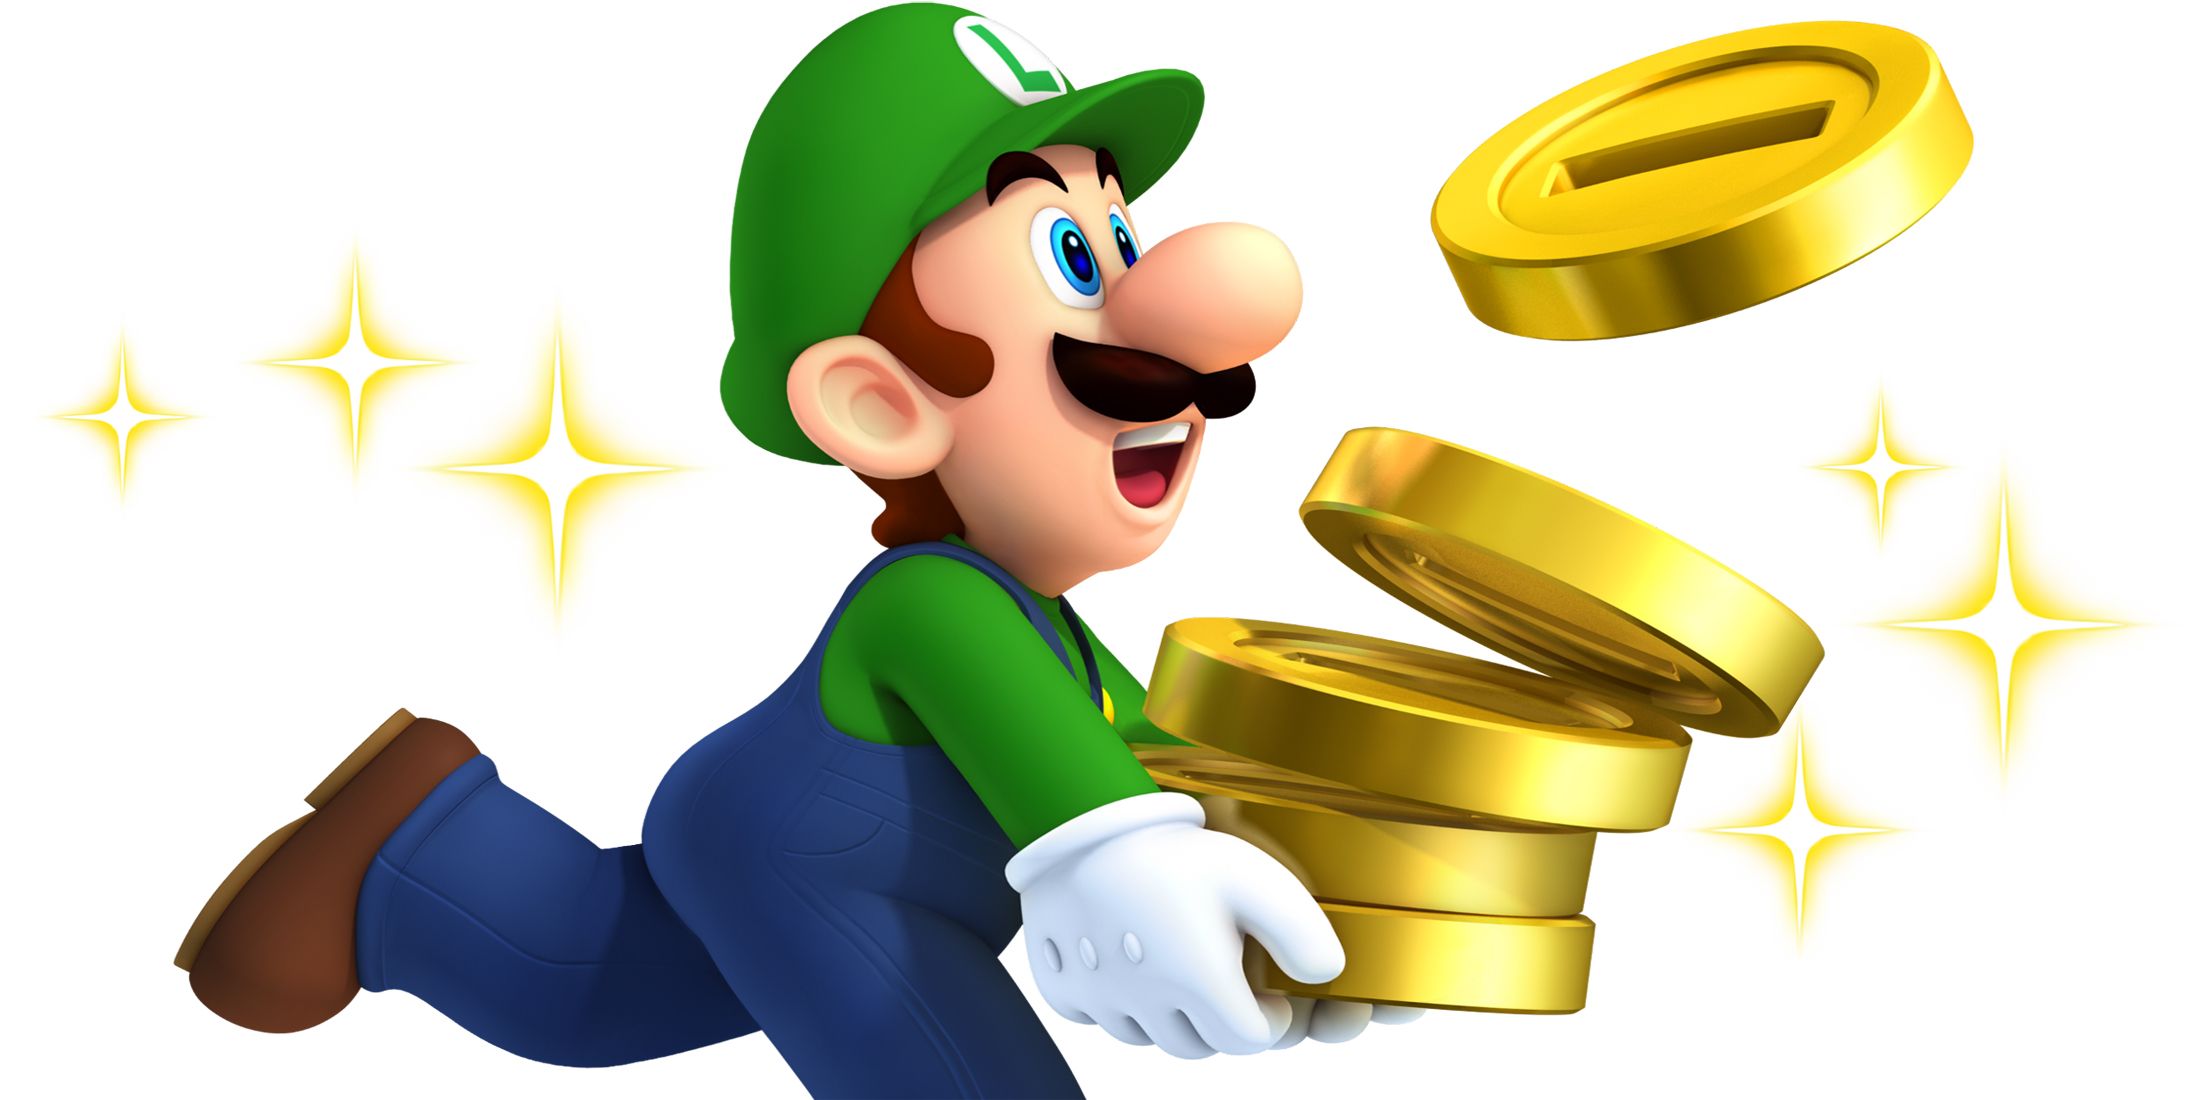 Luigi running with coins